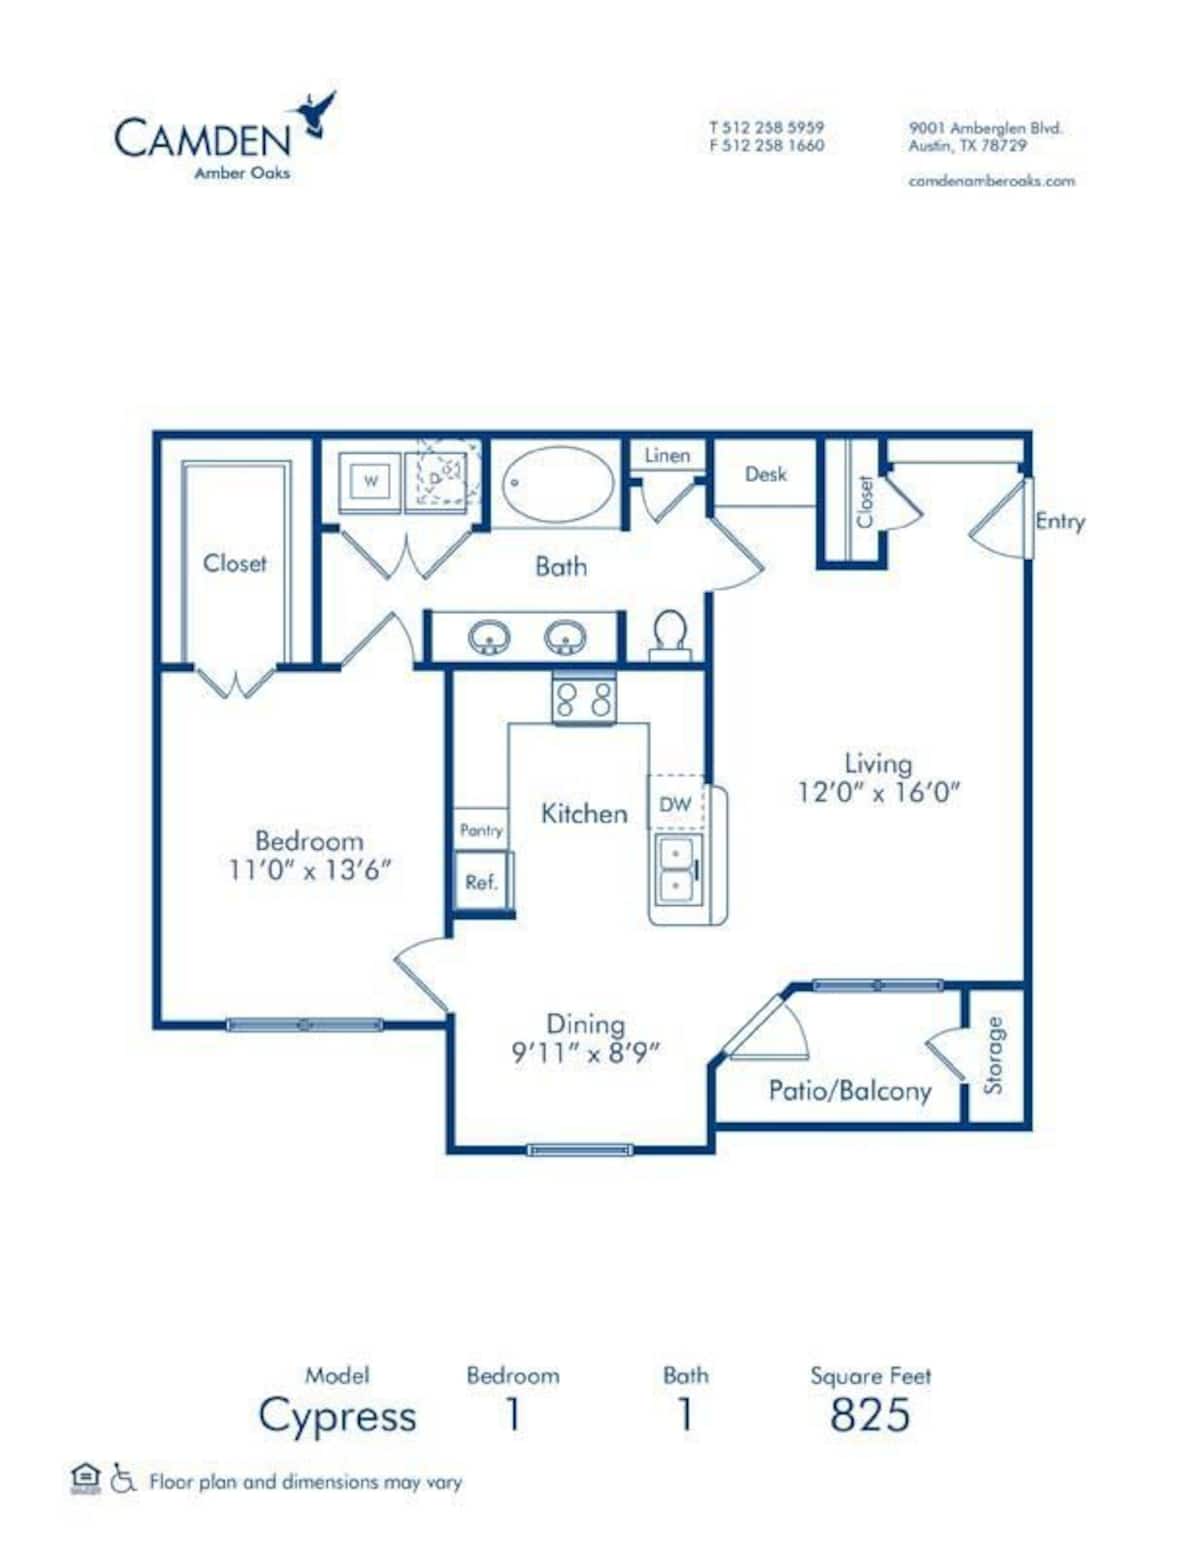 Floorplan diagram for Cypress, showing 1 bedroom